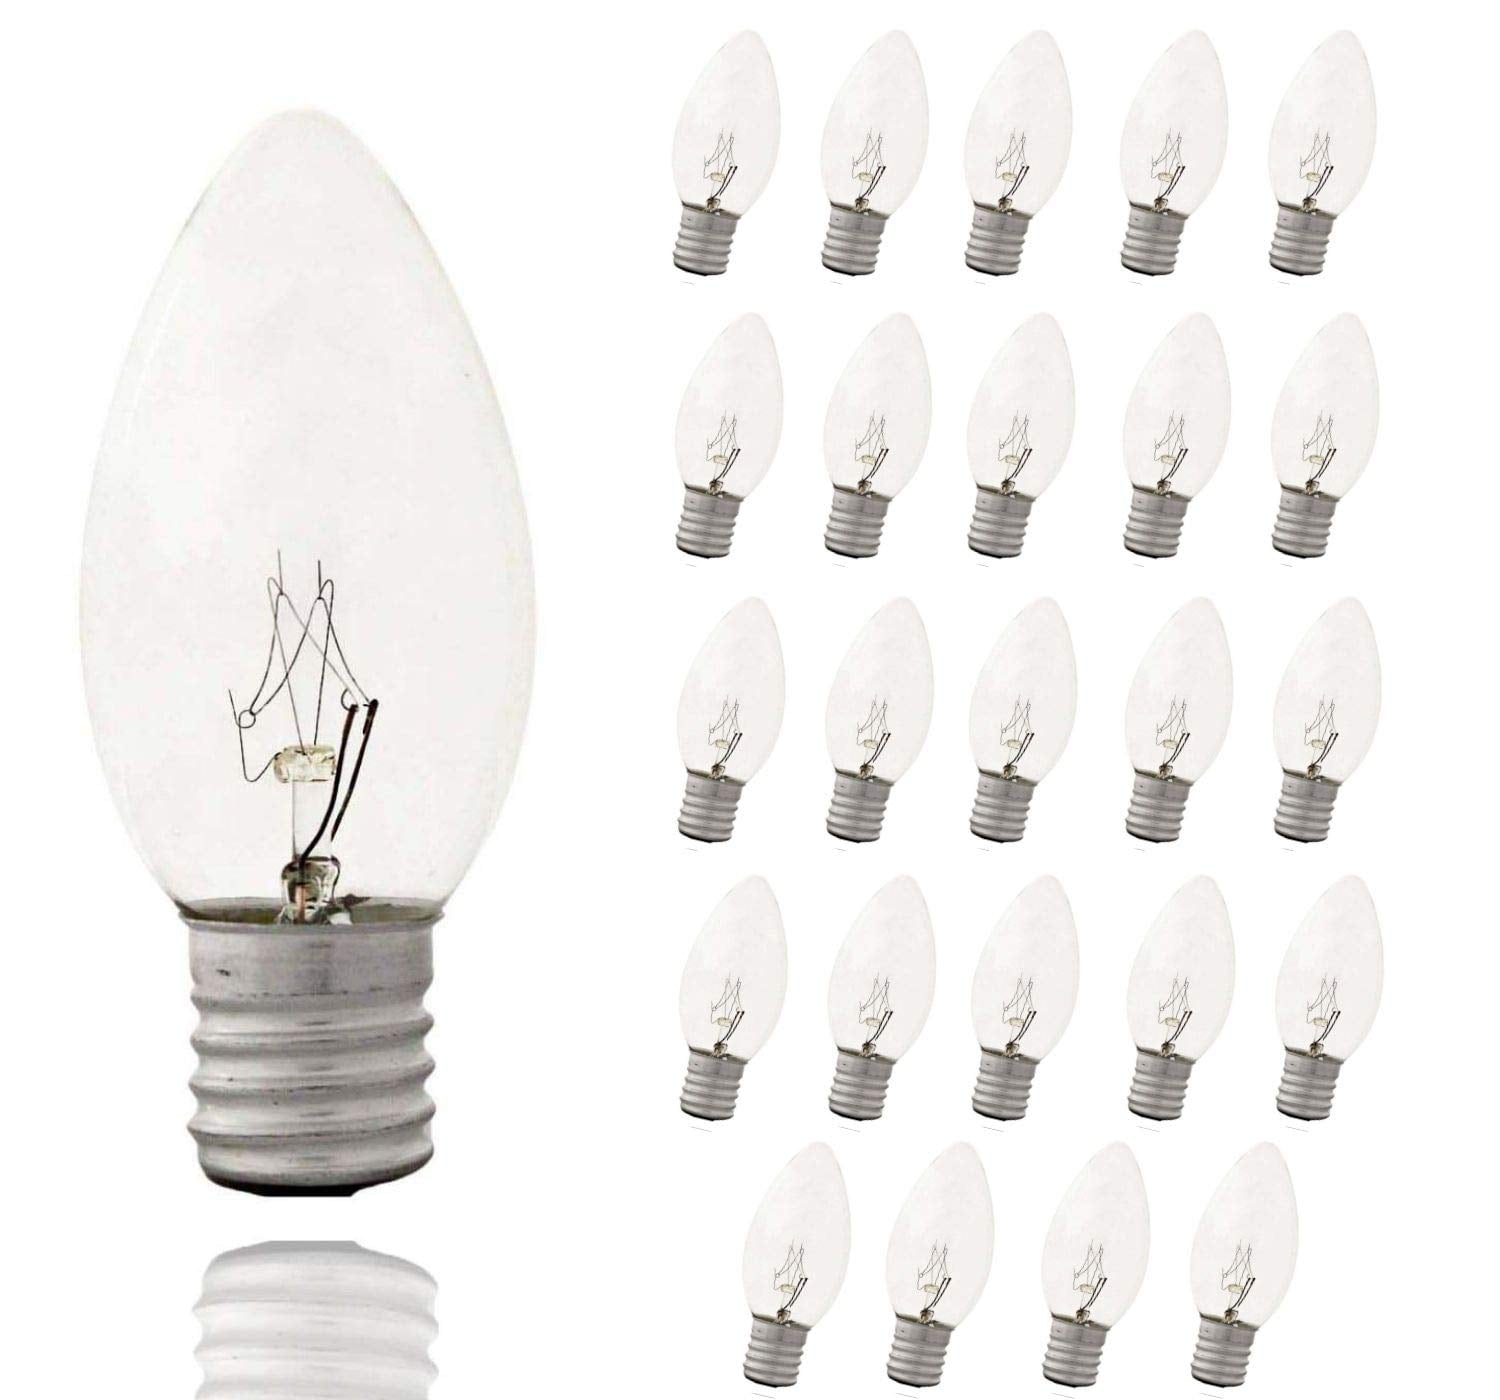 Lot of 12 Pieces Pre-Printed CFL Light Bulb Shaped Sensor Night Lights 